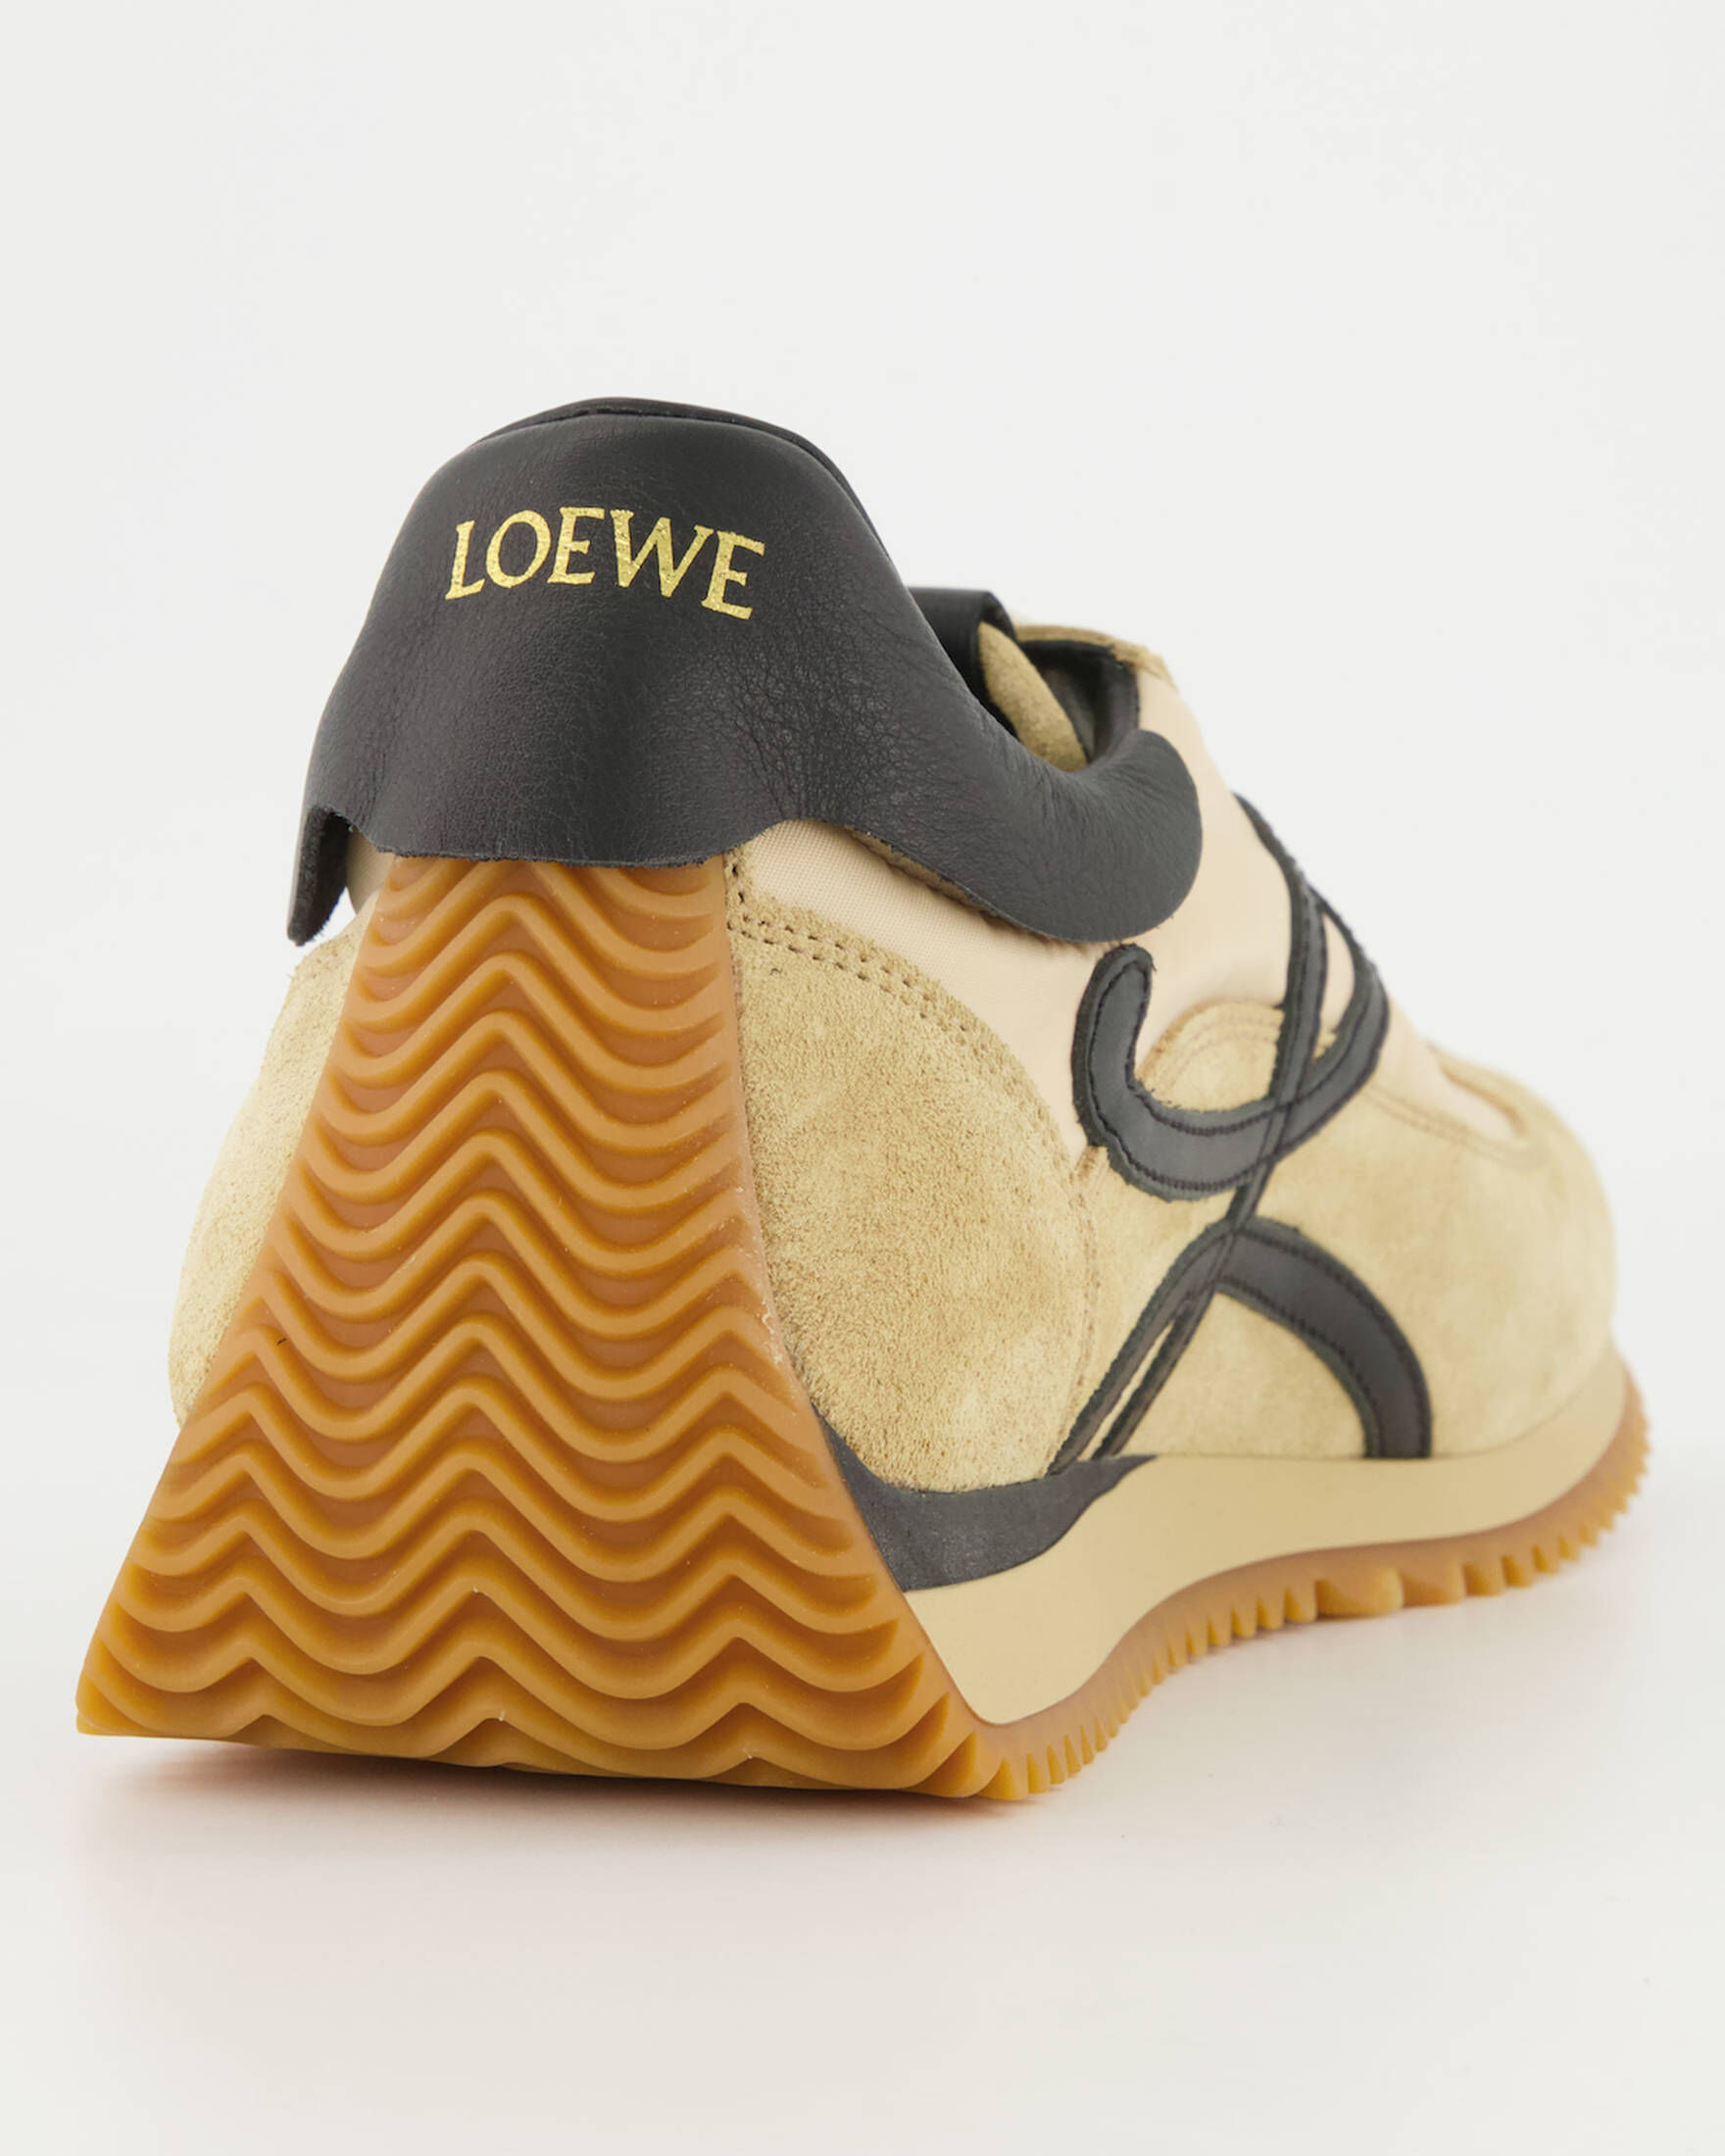 Loewe Wildleder Sneakers Flow Runner aus Veloursleder in Gelb Damen Schuhe Stiefel Stiefel mit Keilabsatz 